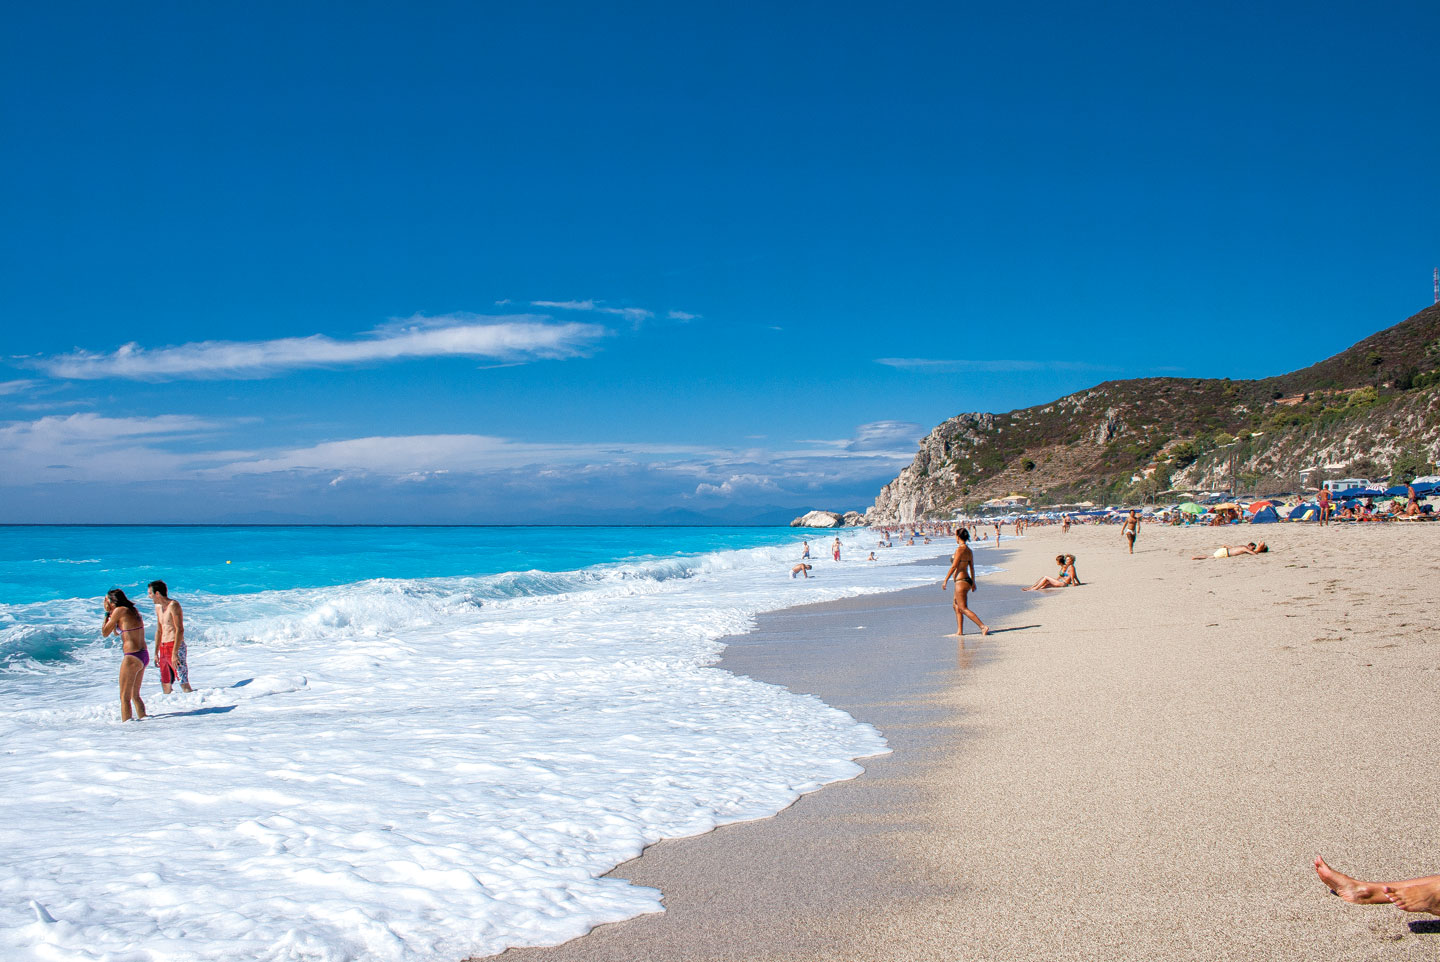 Kathisma beach in Lefkada | Turquoise waters of the Ionian sea | Lefkada Slow Guide